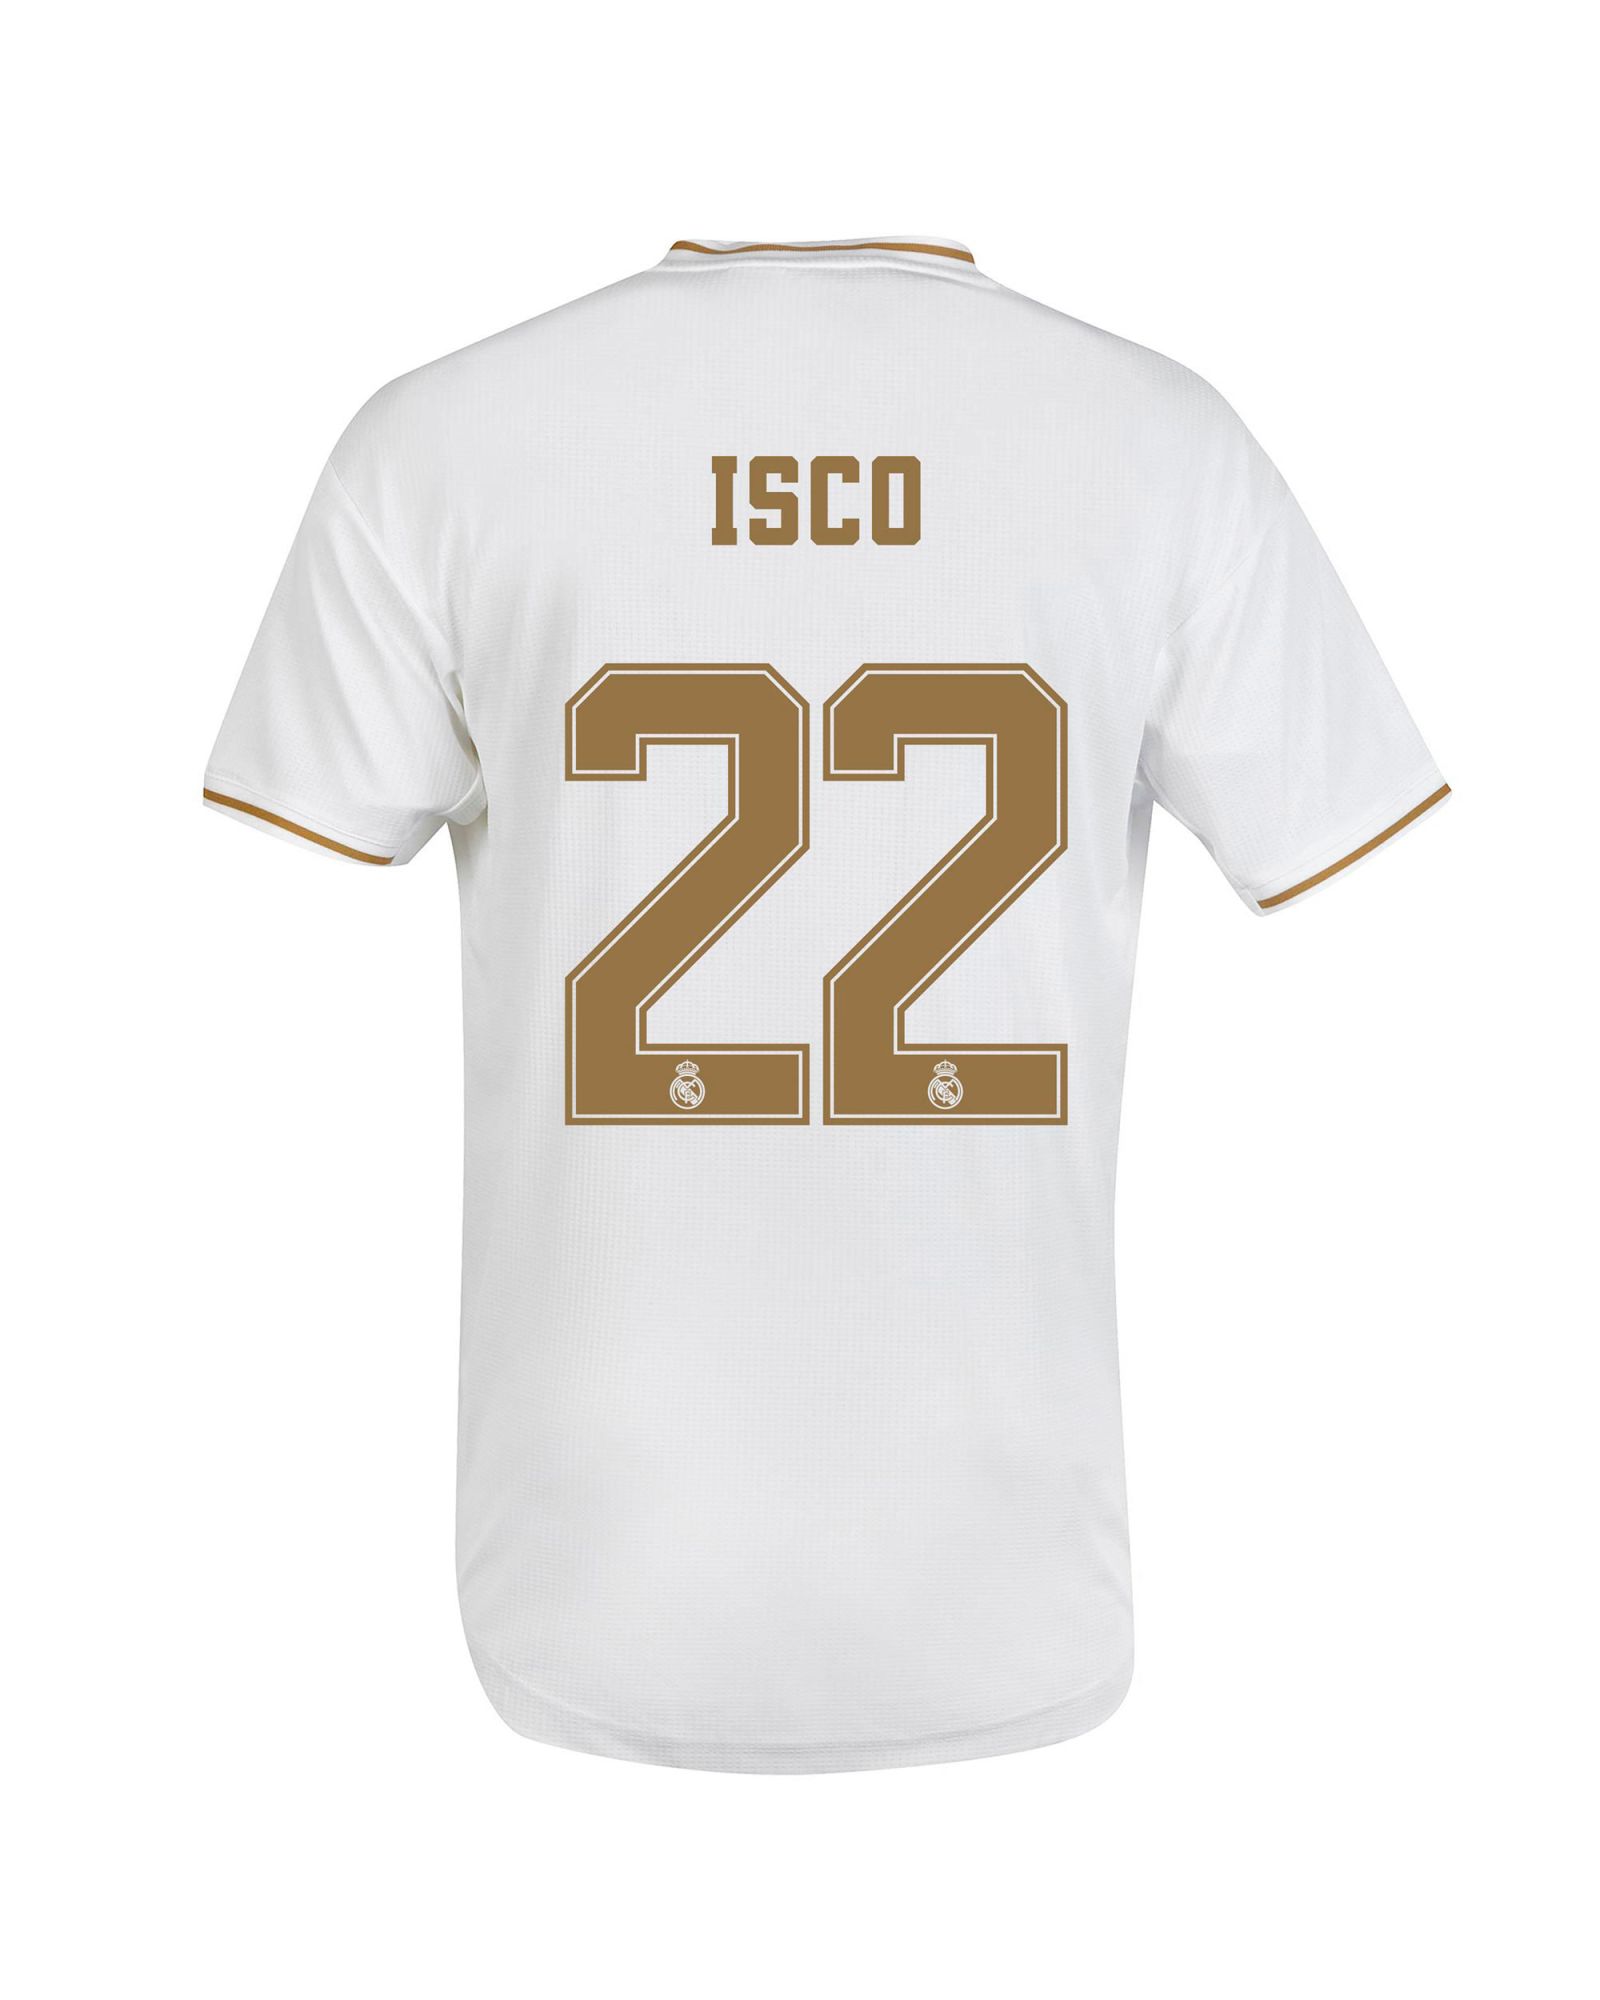 Camiseta 1ª Real Madrid 2019/2020 Authentic Isco - Fútbol Factory